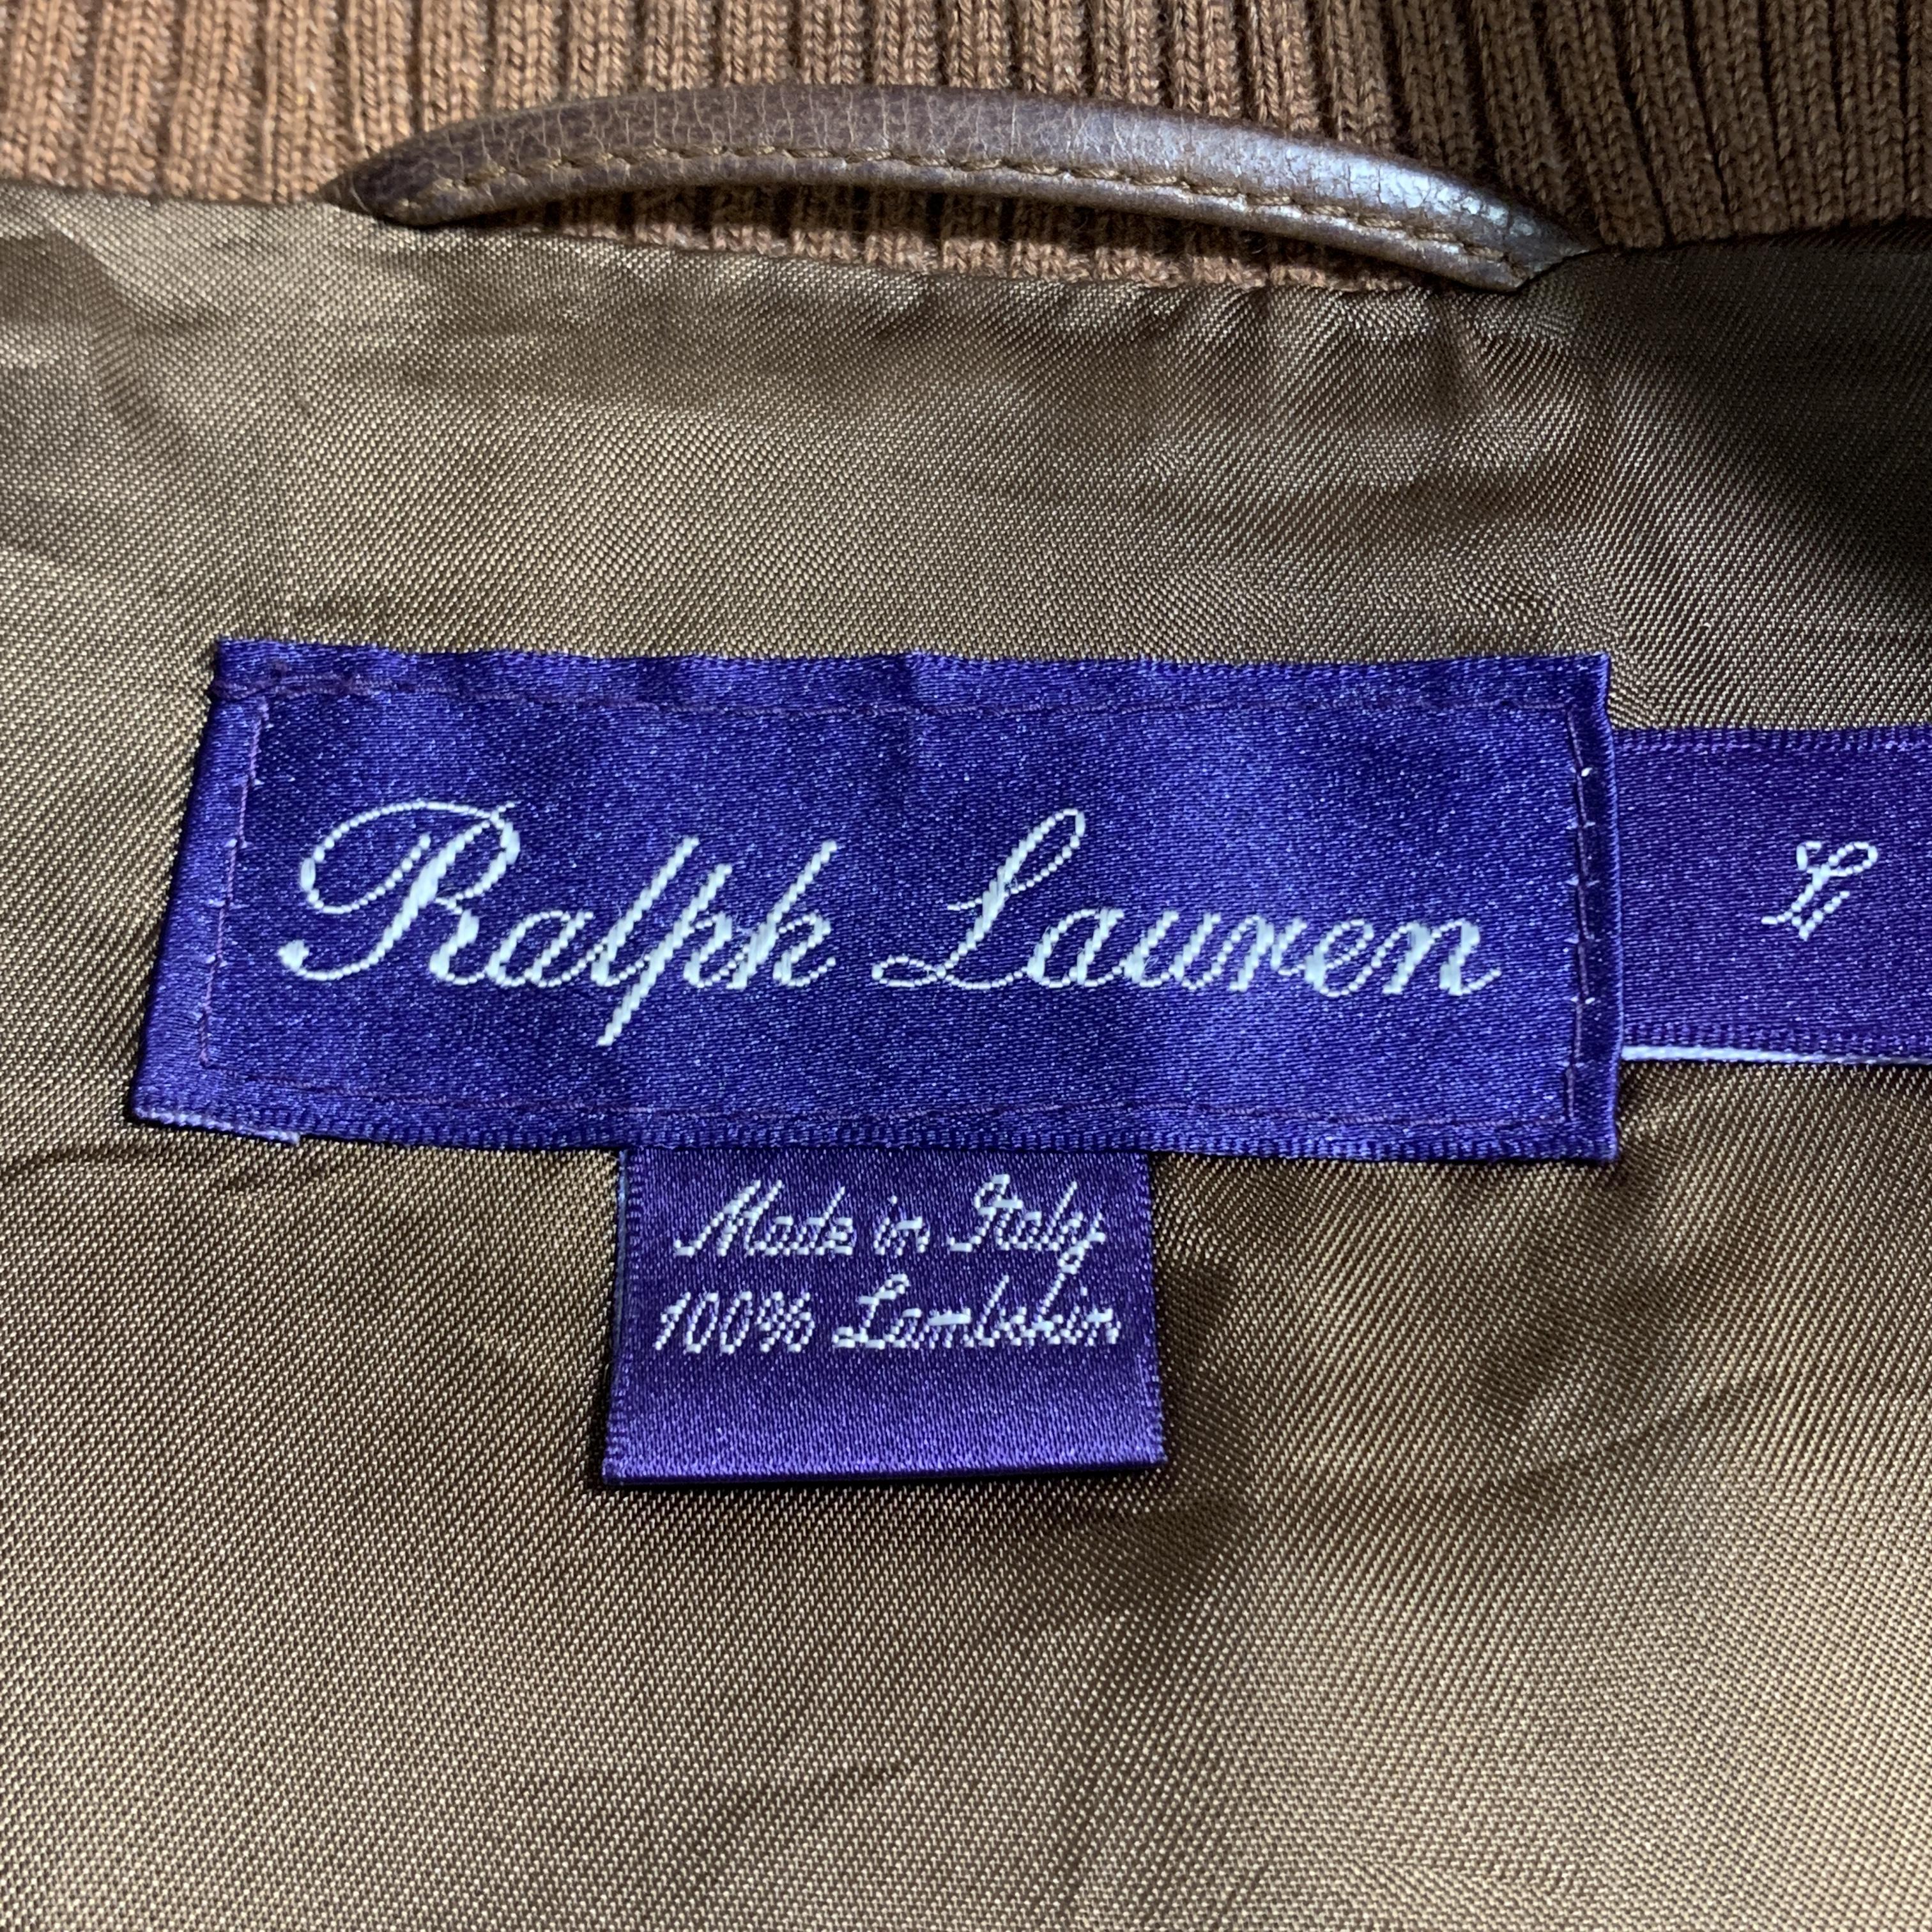 Brown RALPH LAUREN L Tan Leather Zip Up Slit Pockets Bomber Style Jacket